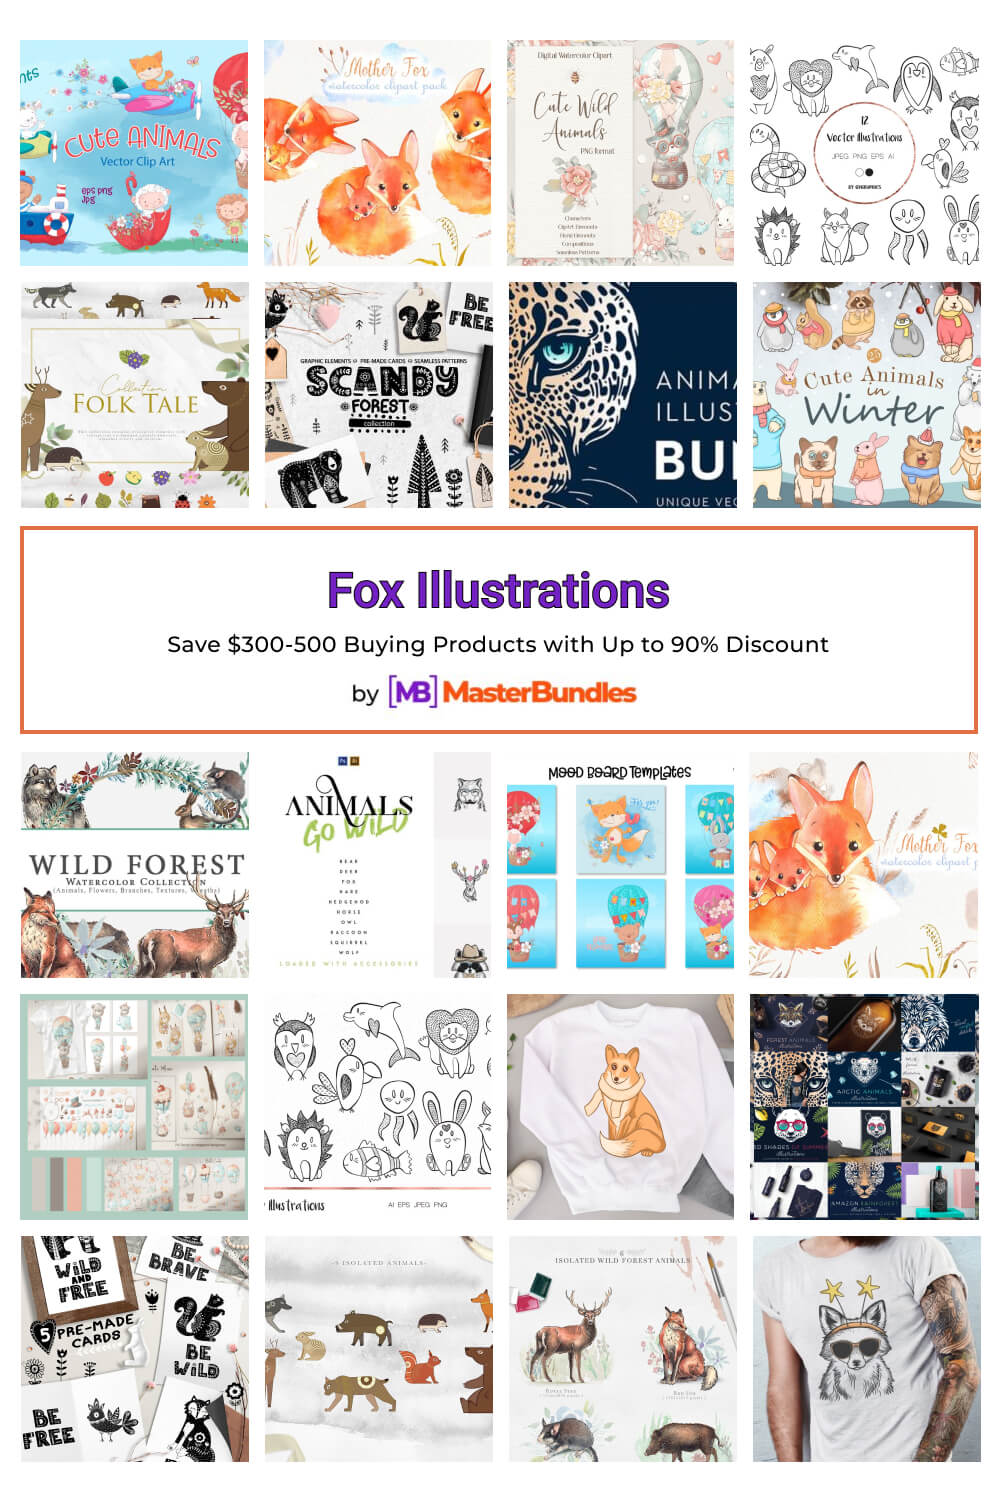 fox illustrations pinterest image.